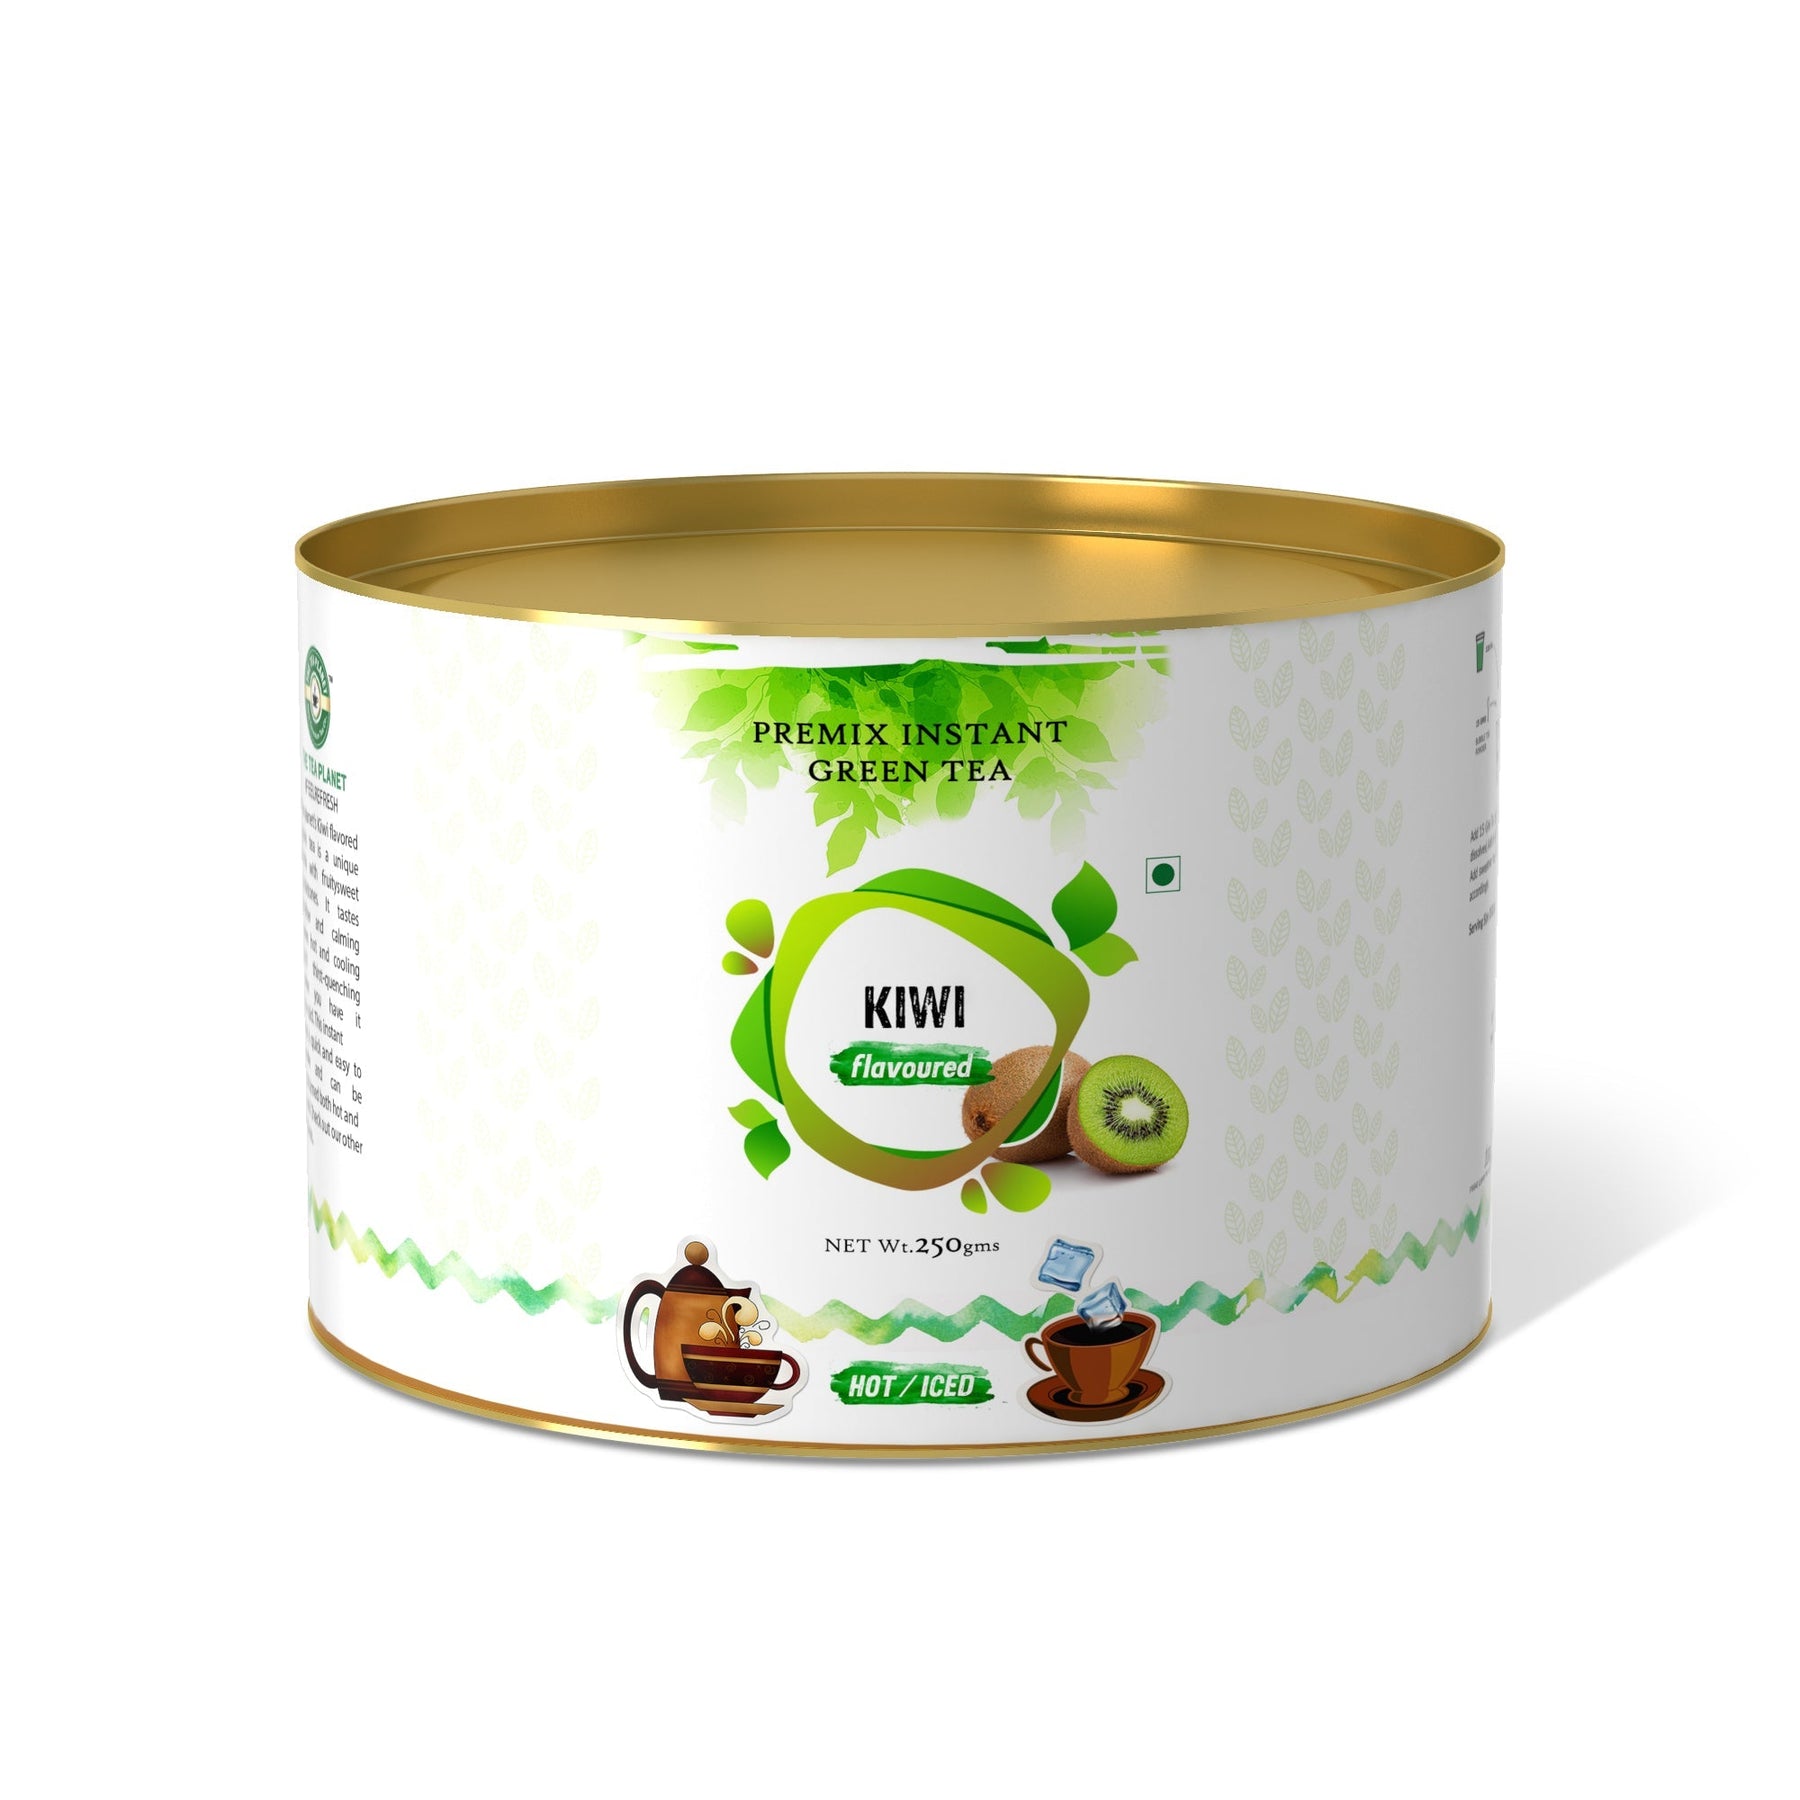 Kiwi Flavored Instant Green Tea - 800 gms